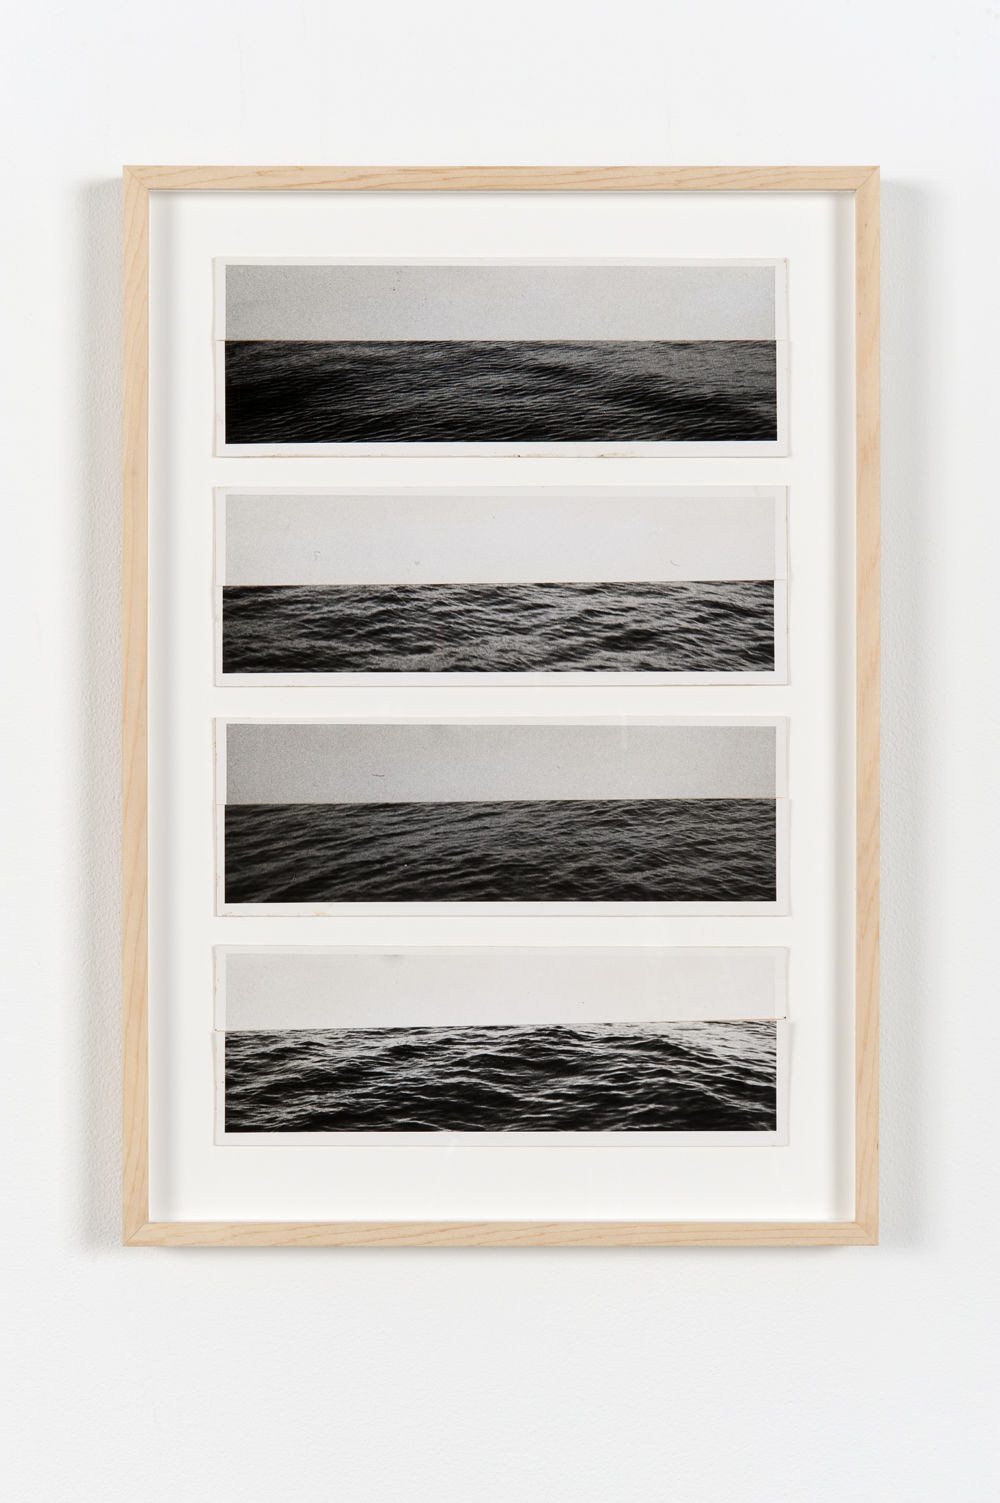 ​Robert Kleyn, Horizons, 1974–1975, hand-printed photographs on cardstock, 19 x 14 in. (48 x 34 cm) by 